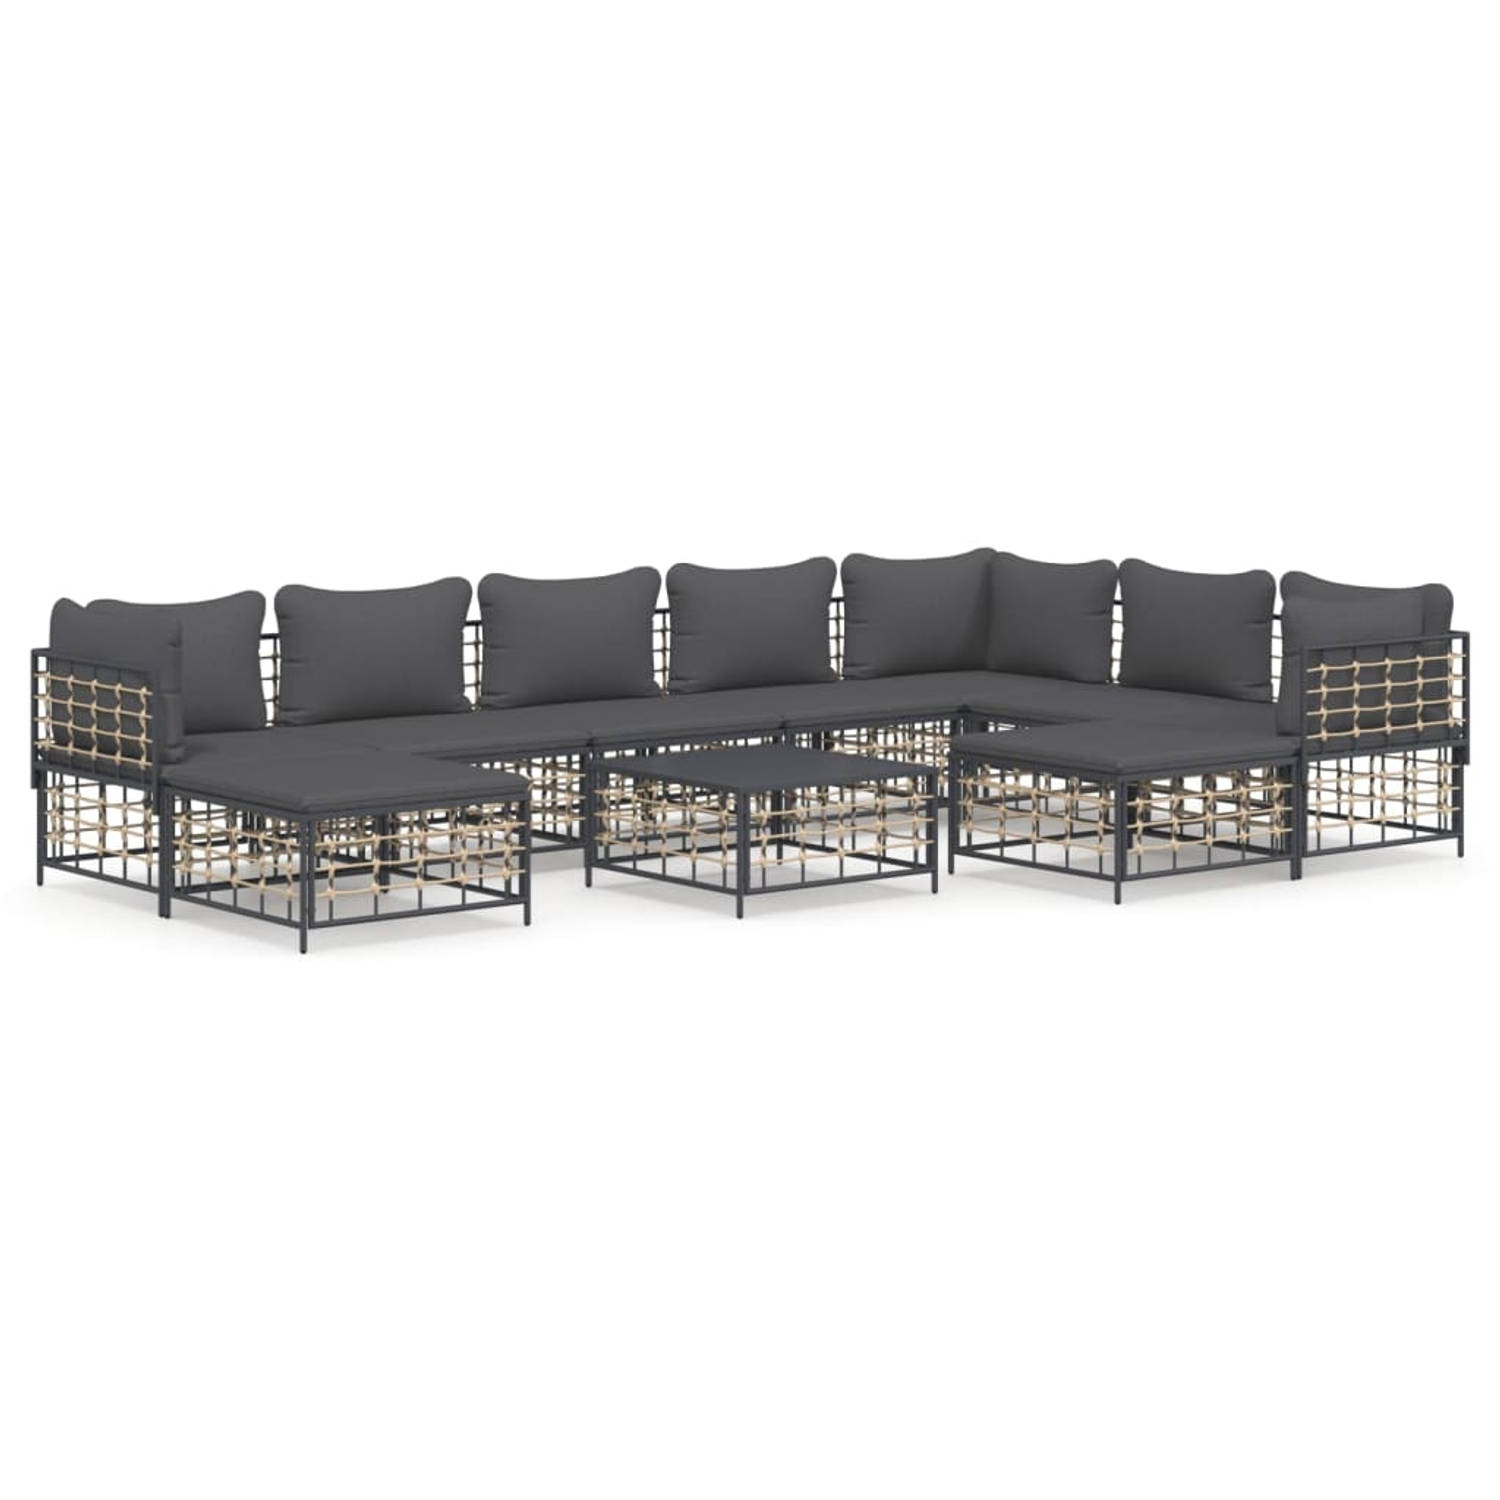 The Living Store Loungeset - Antraciet - Poly rattan - 72 x 72 x 66 cm - Comfortabel loungen - Weerbestendig - Stevig frame - Inclusief kussens - Stevig tafelblad - Modulair design